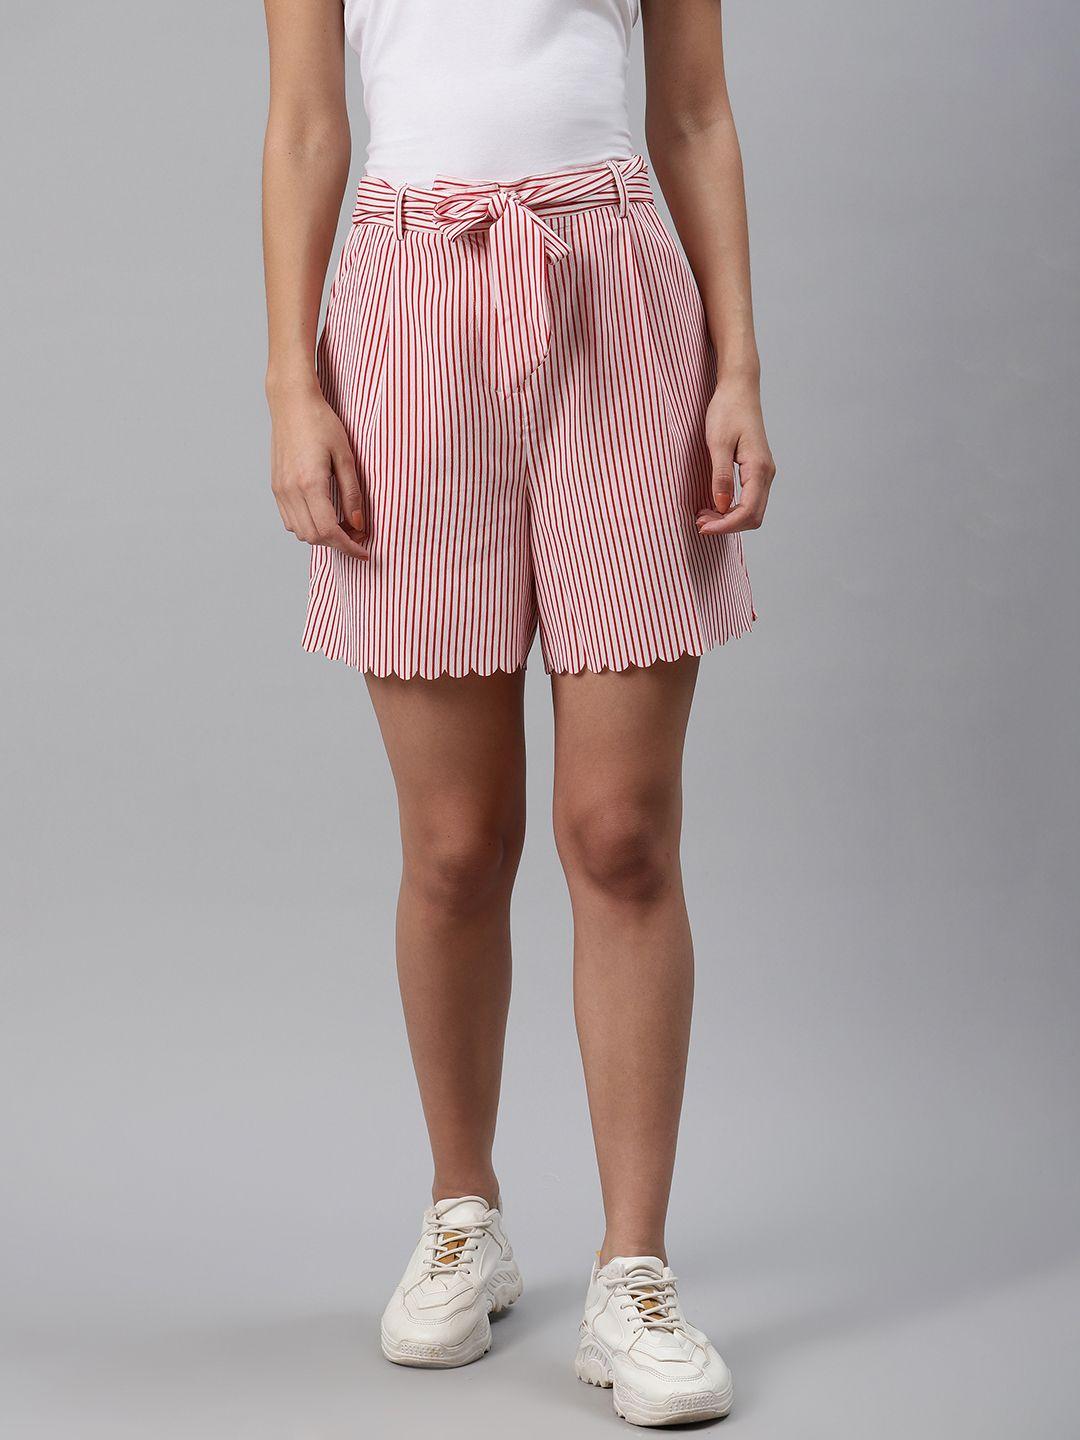 varushka women red & white striped slim fit scalloped shorts